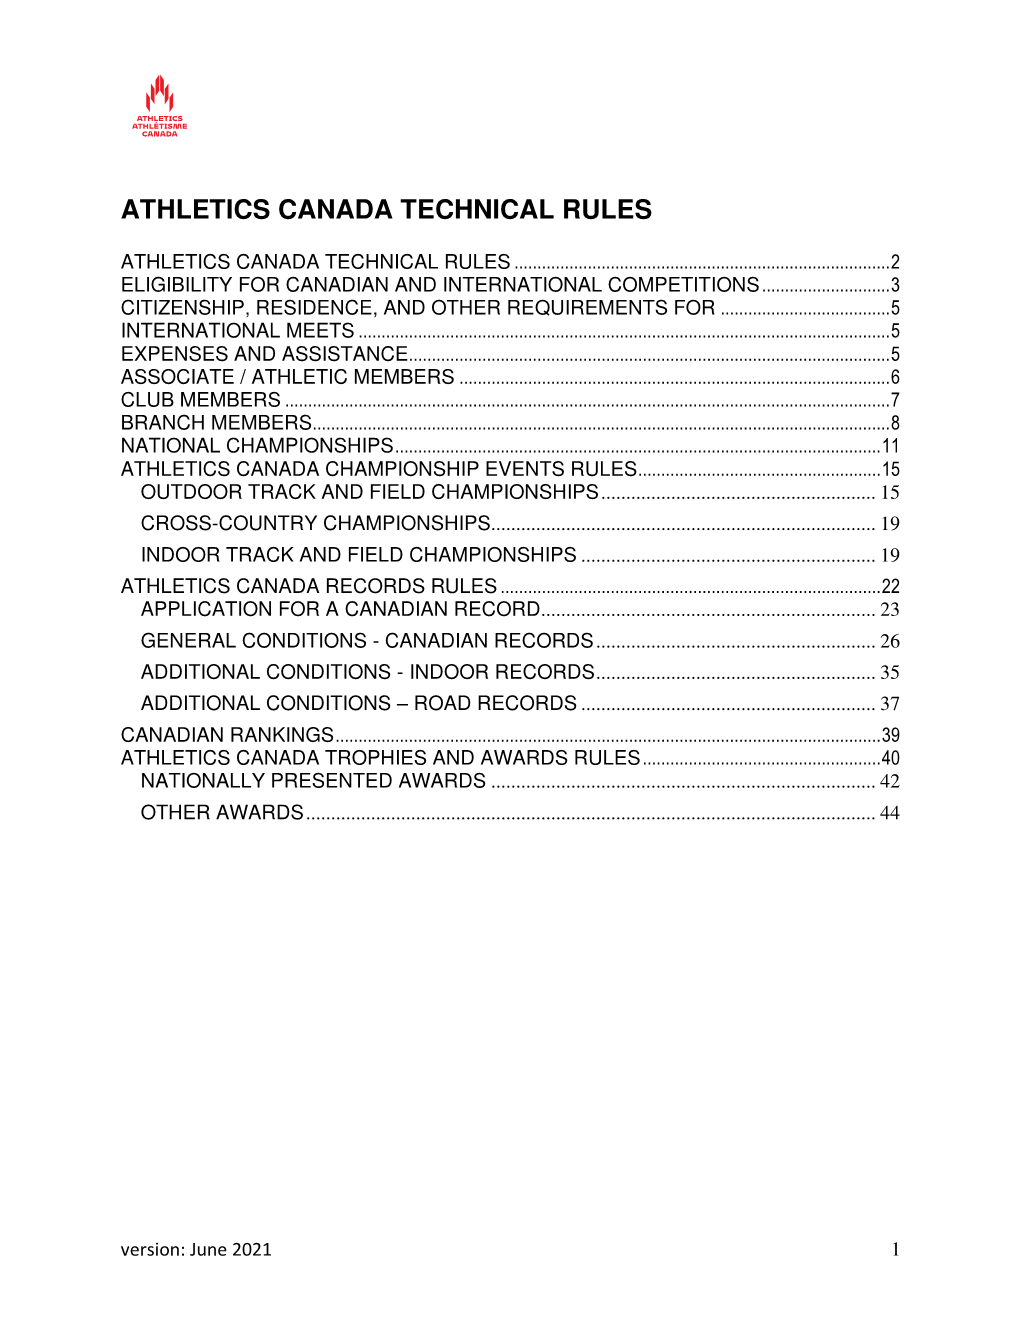 Athletics Canada Technical Rules June 2021